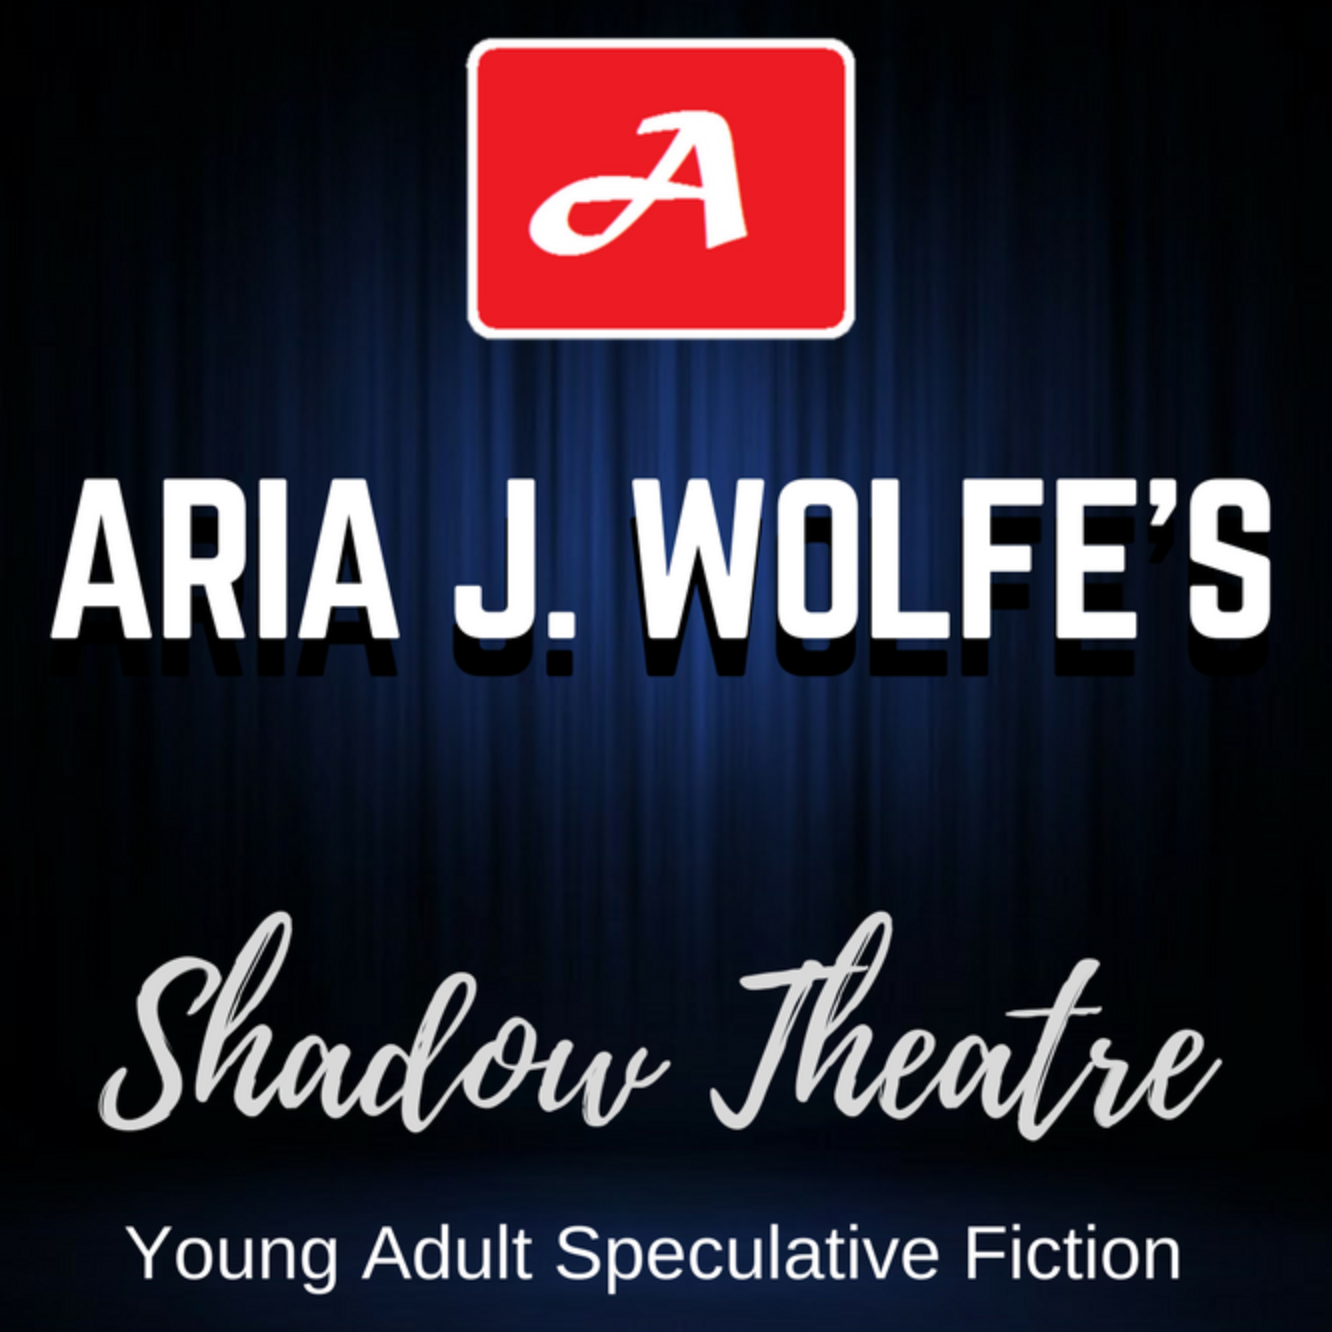 Aria J. Wolfe's Shadow Theatre